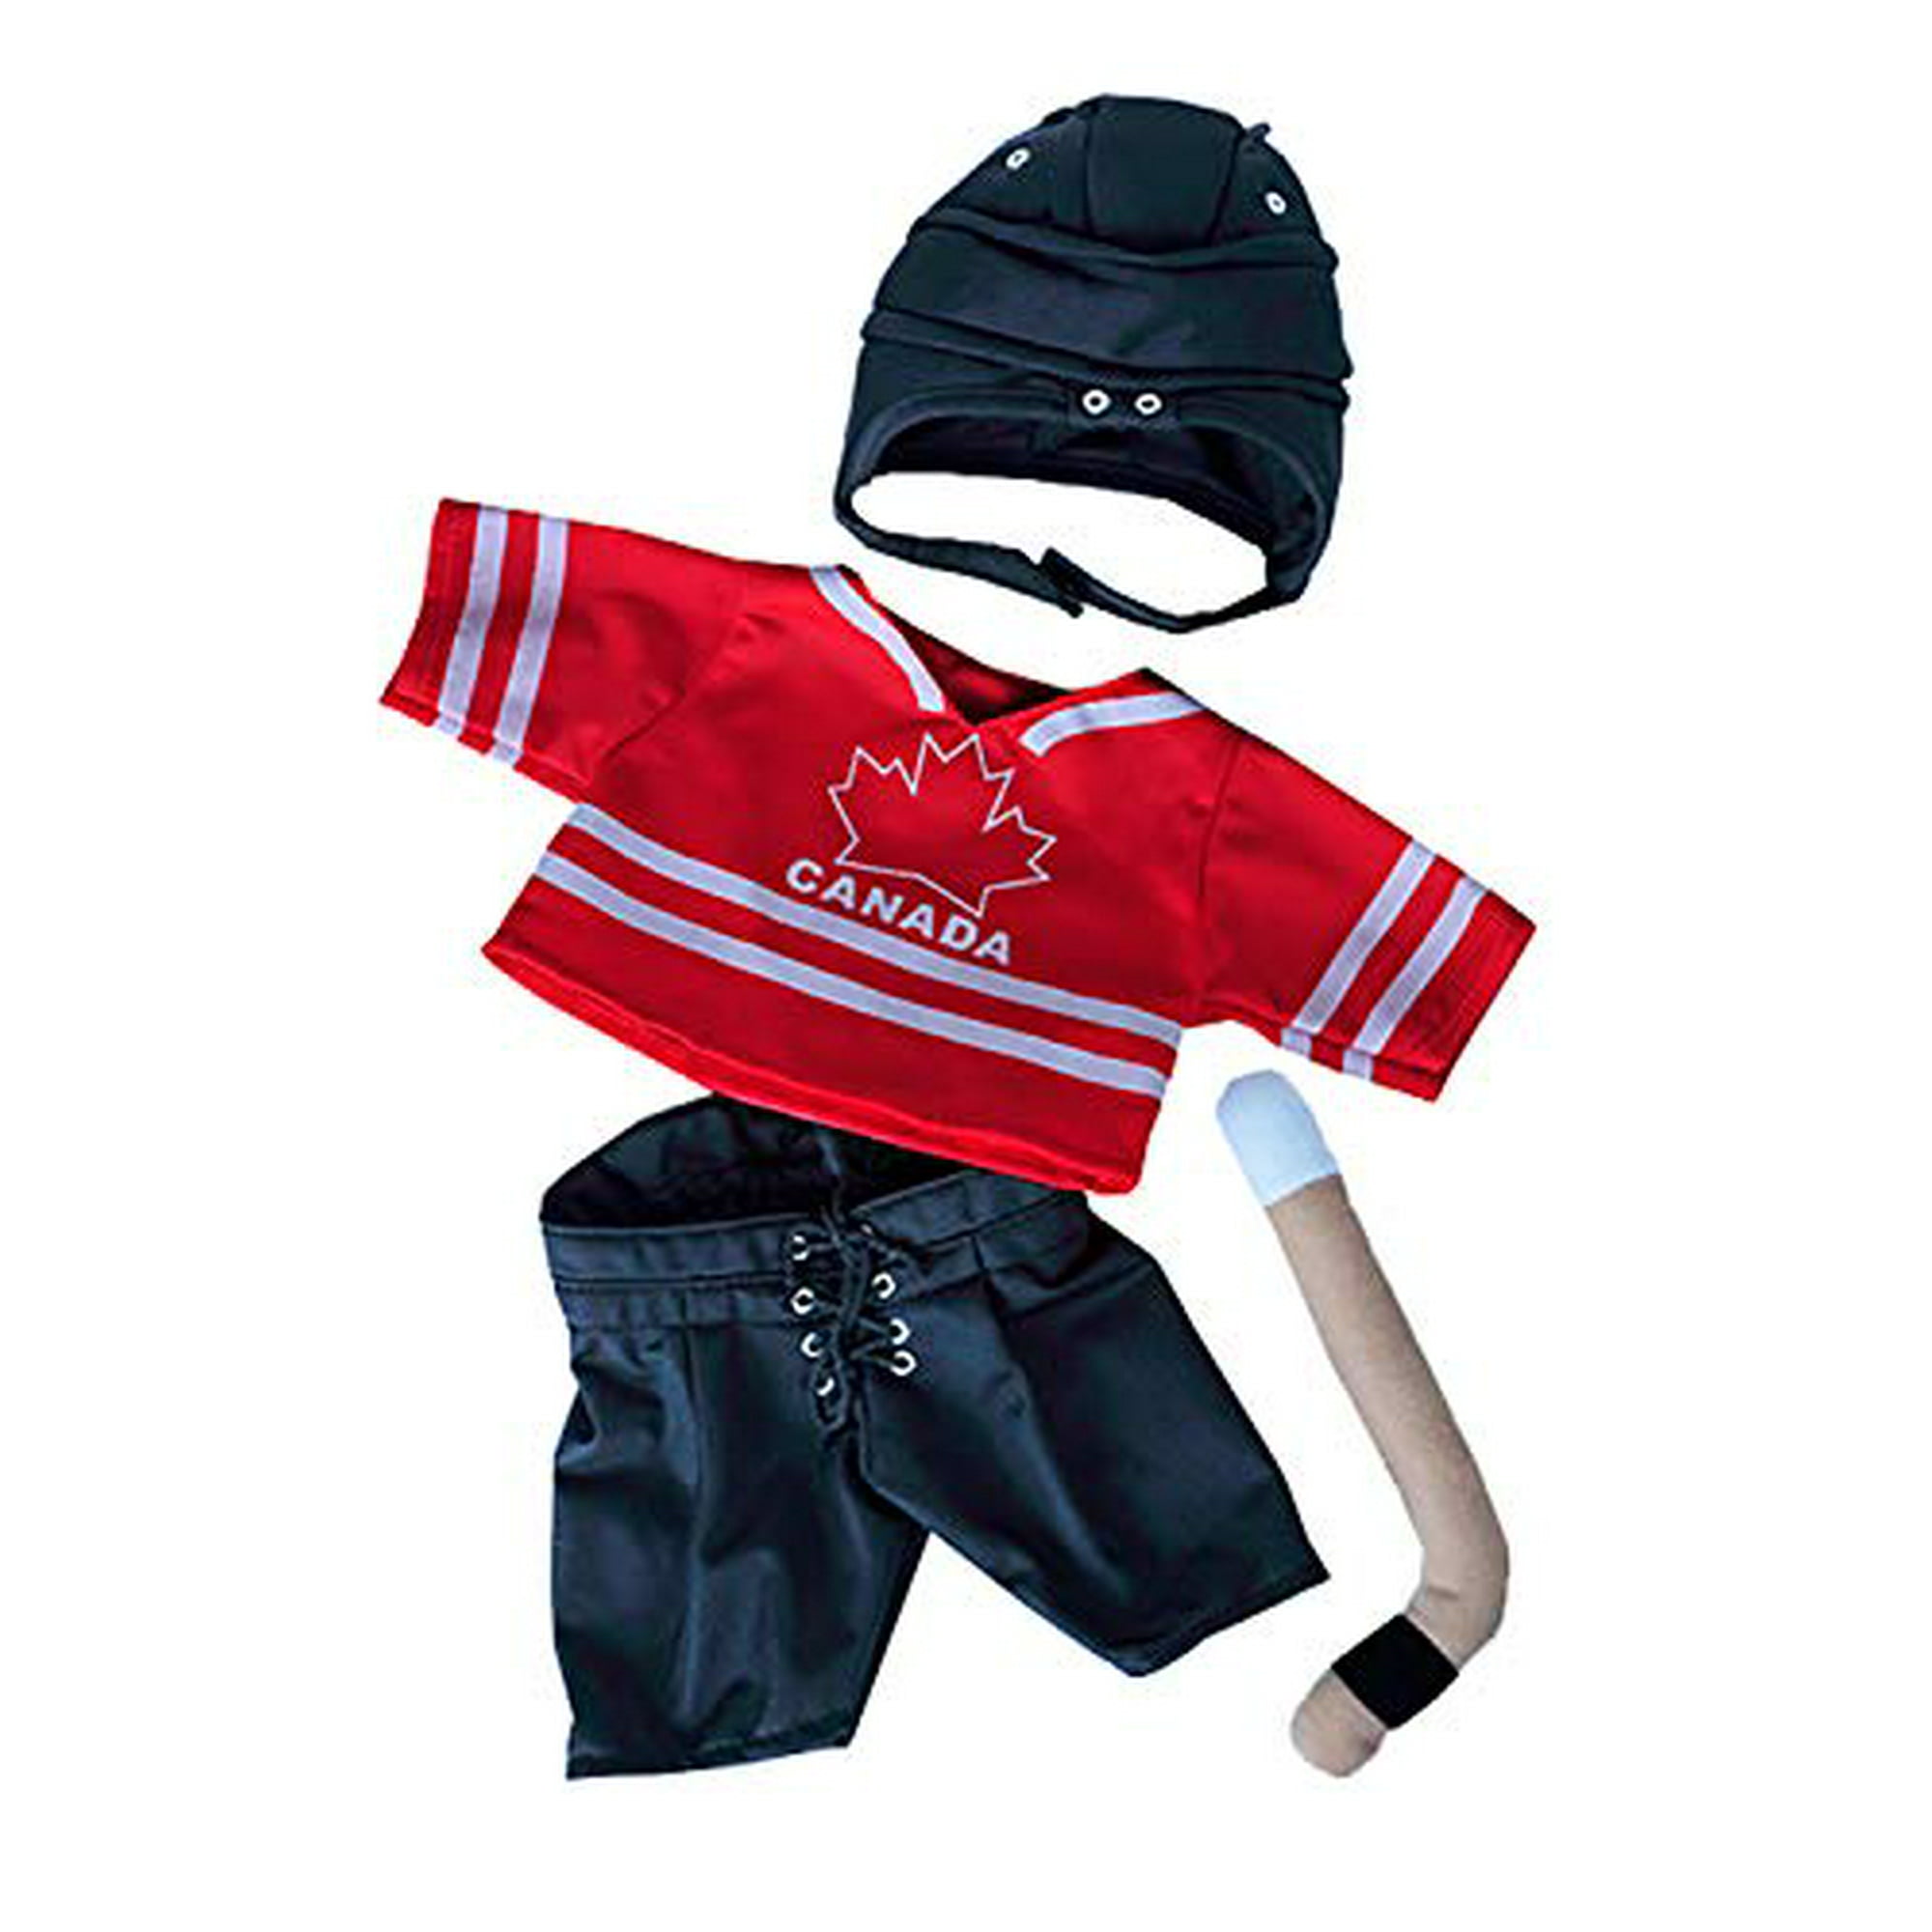 Canada Hockey w/Helmet & Stick Teddy Bear Clothes Fits Most 14